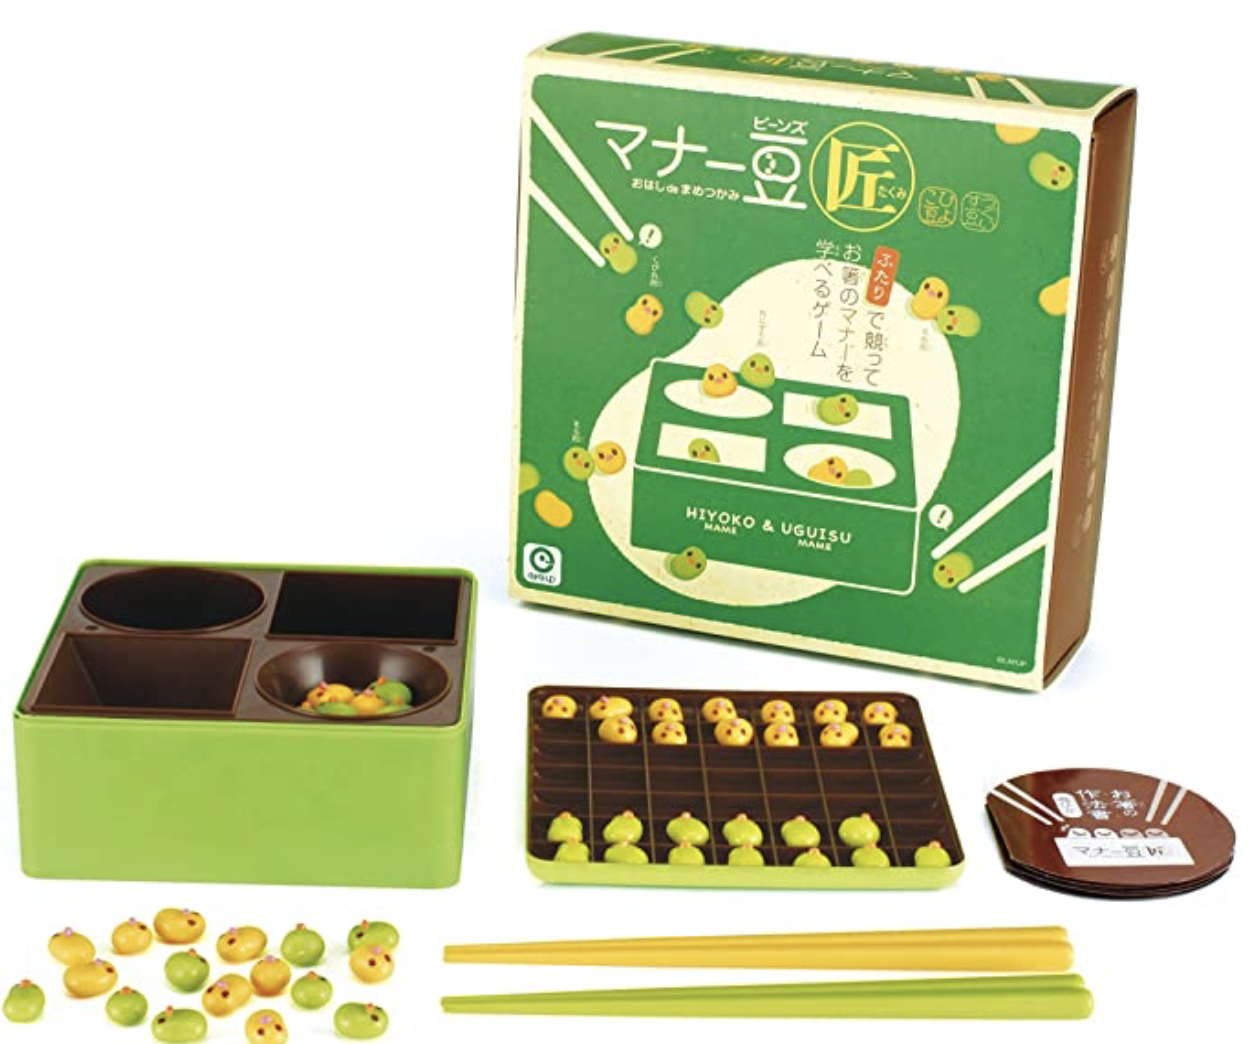 Manner Beans Takumi Chopsticks Practice Kit